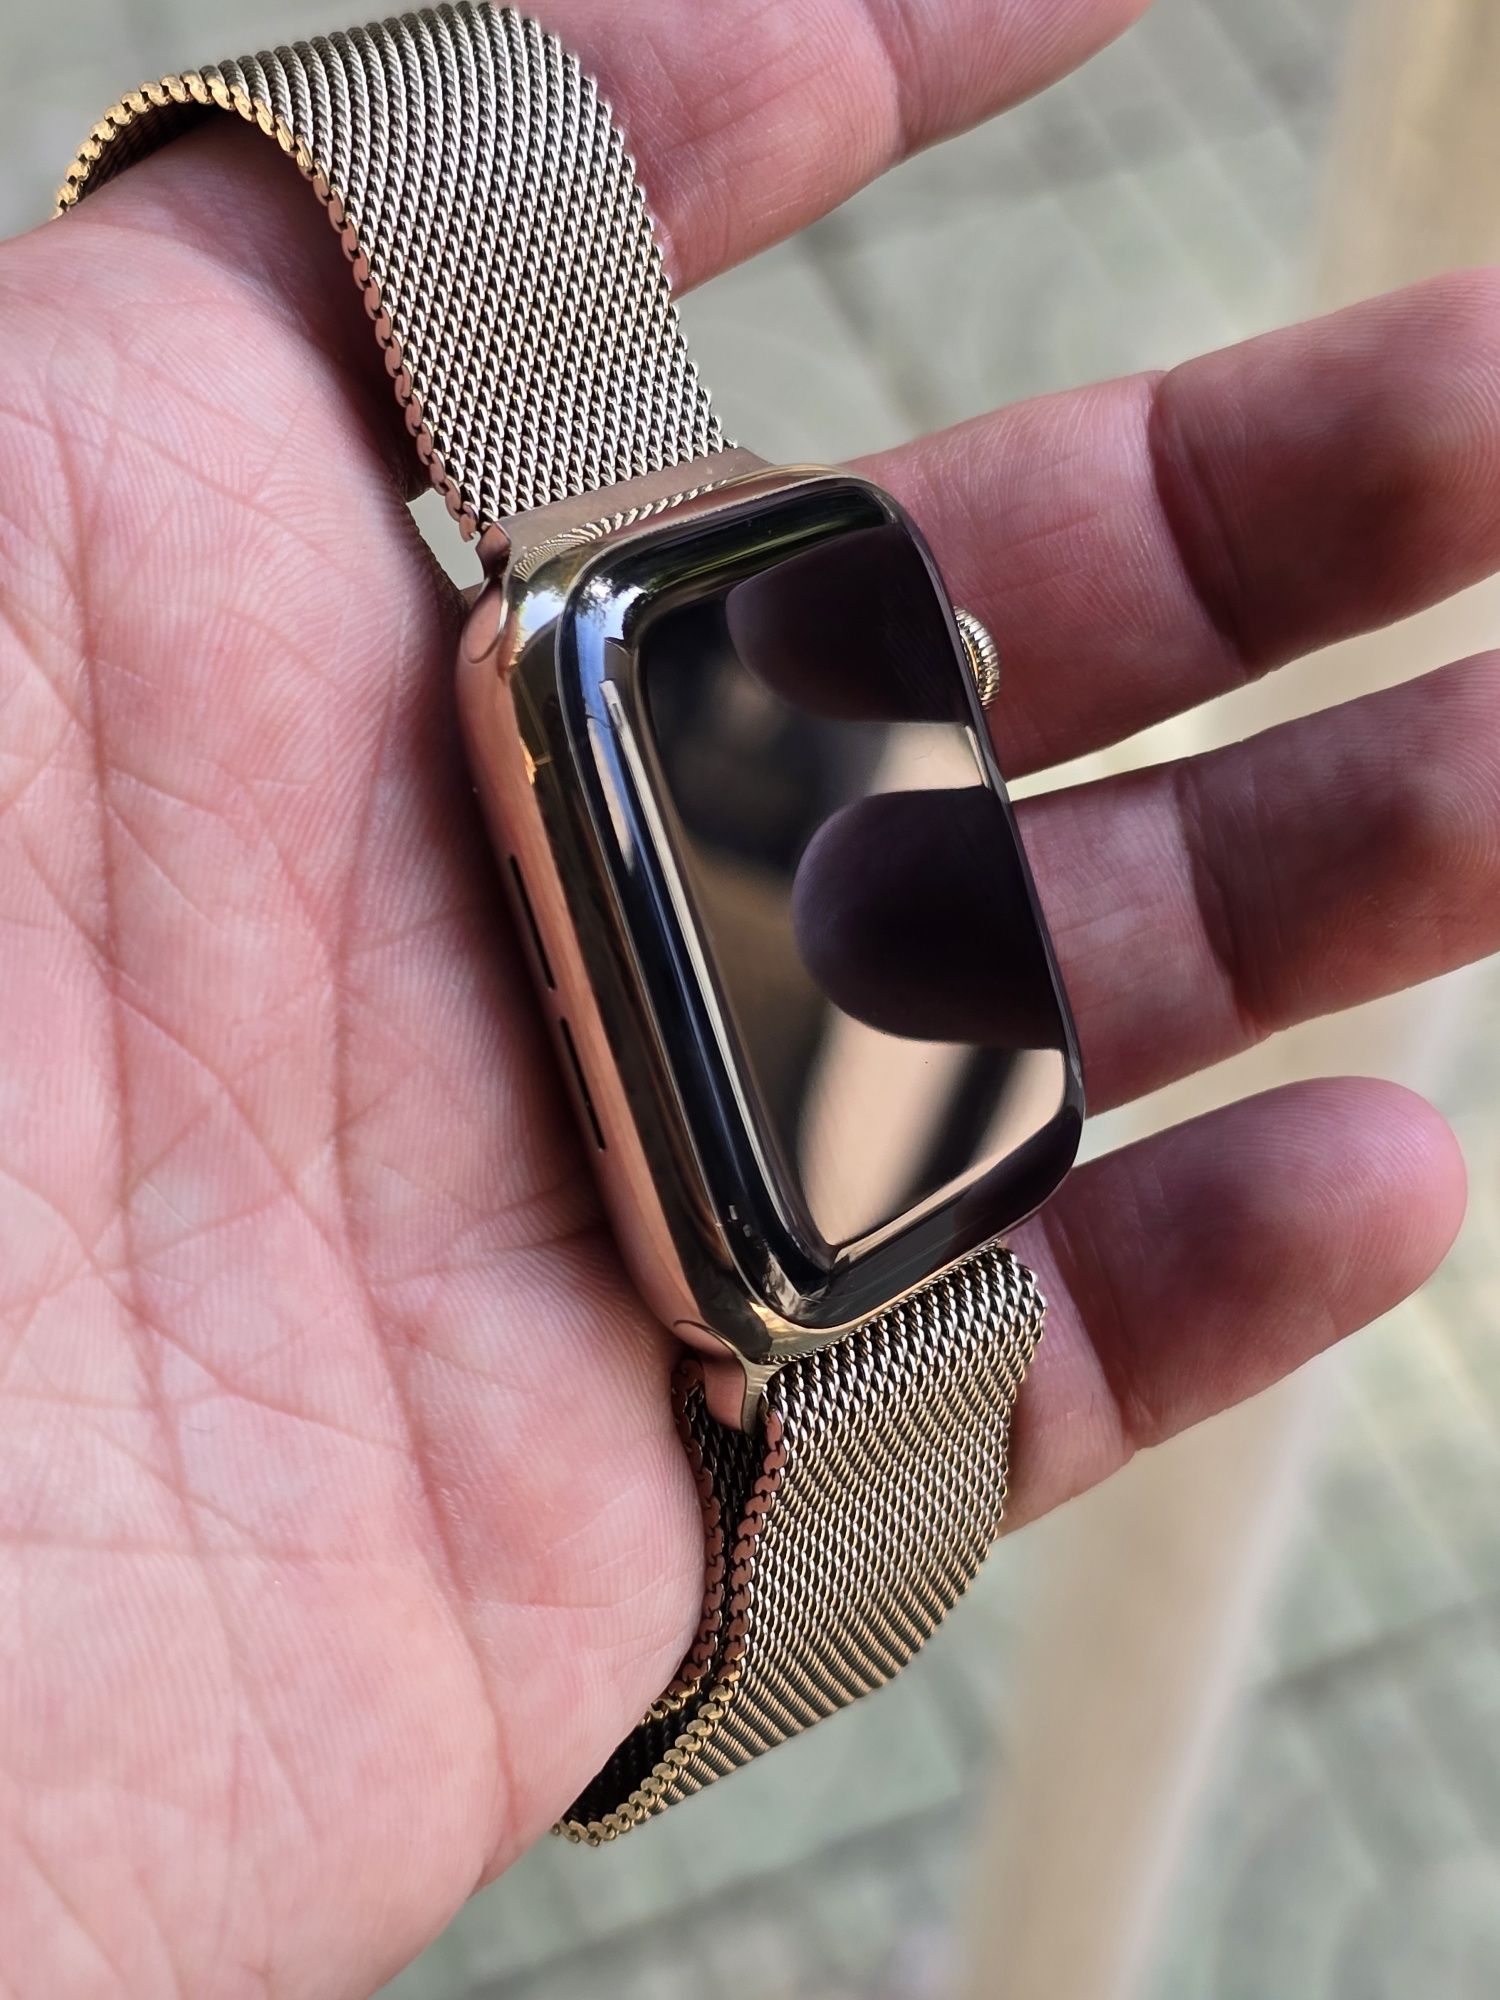 Apple Watch Series 6 gold